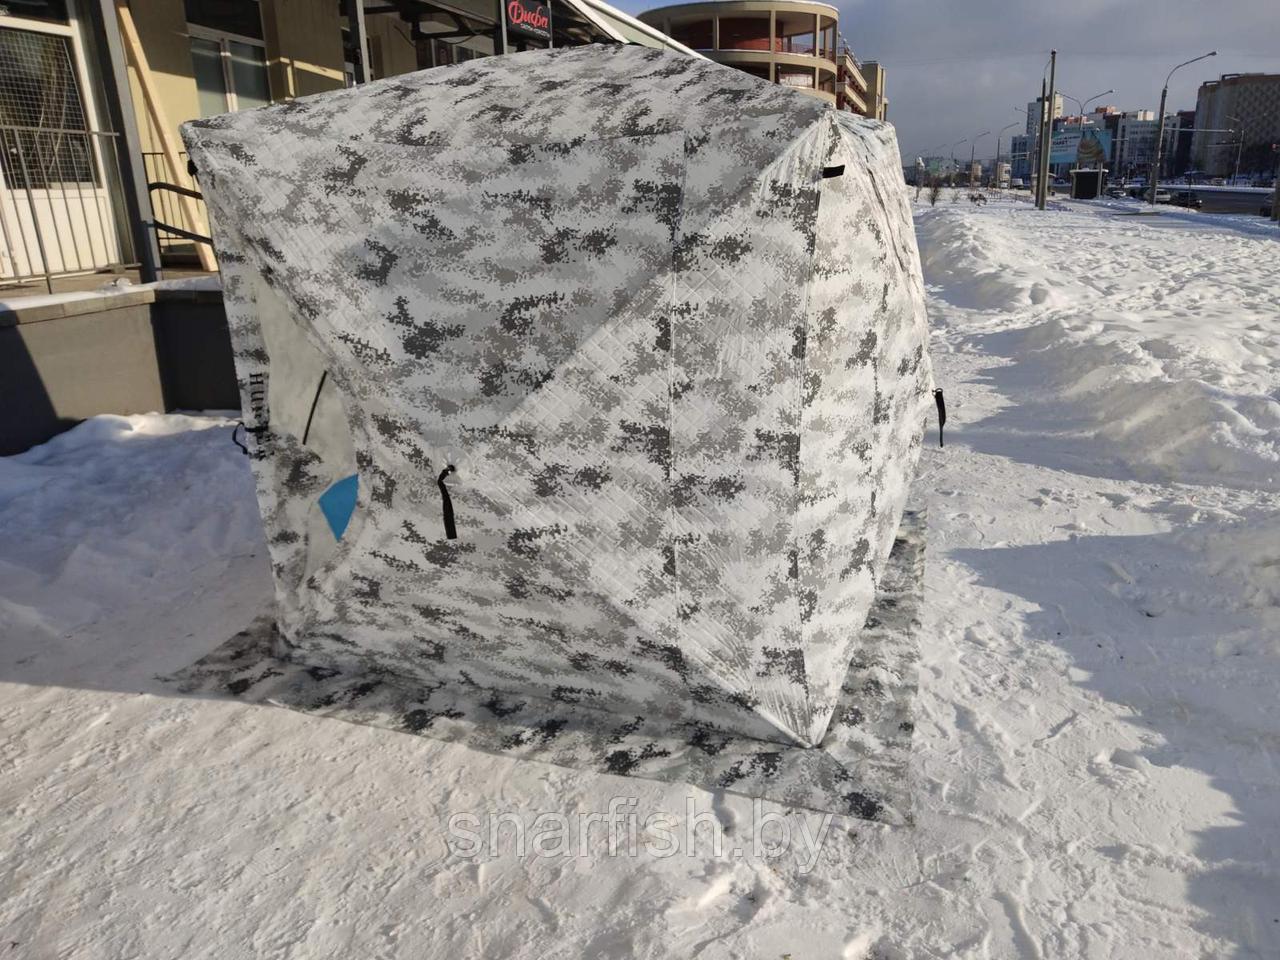 Палатка зимняя утепленная 3-х слойная Trophy Hunter куб 2,0х2,0х2,05м, цвет пиксель-зима